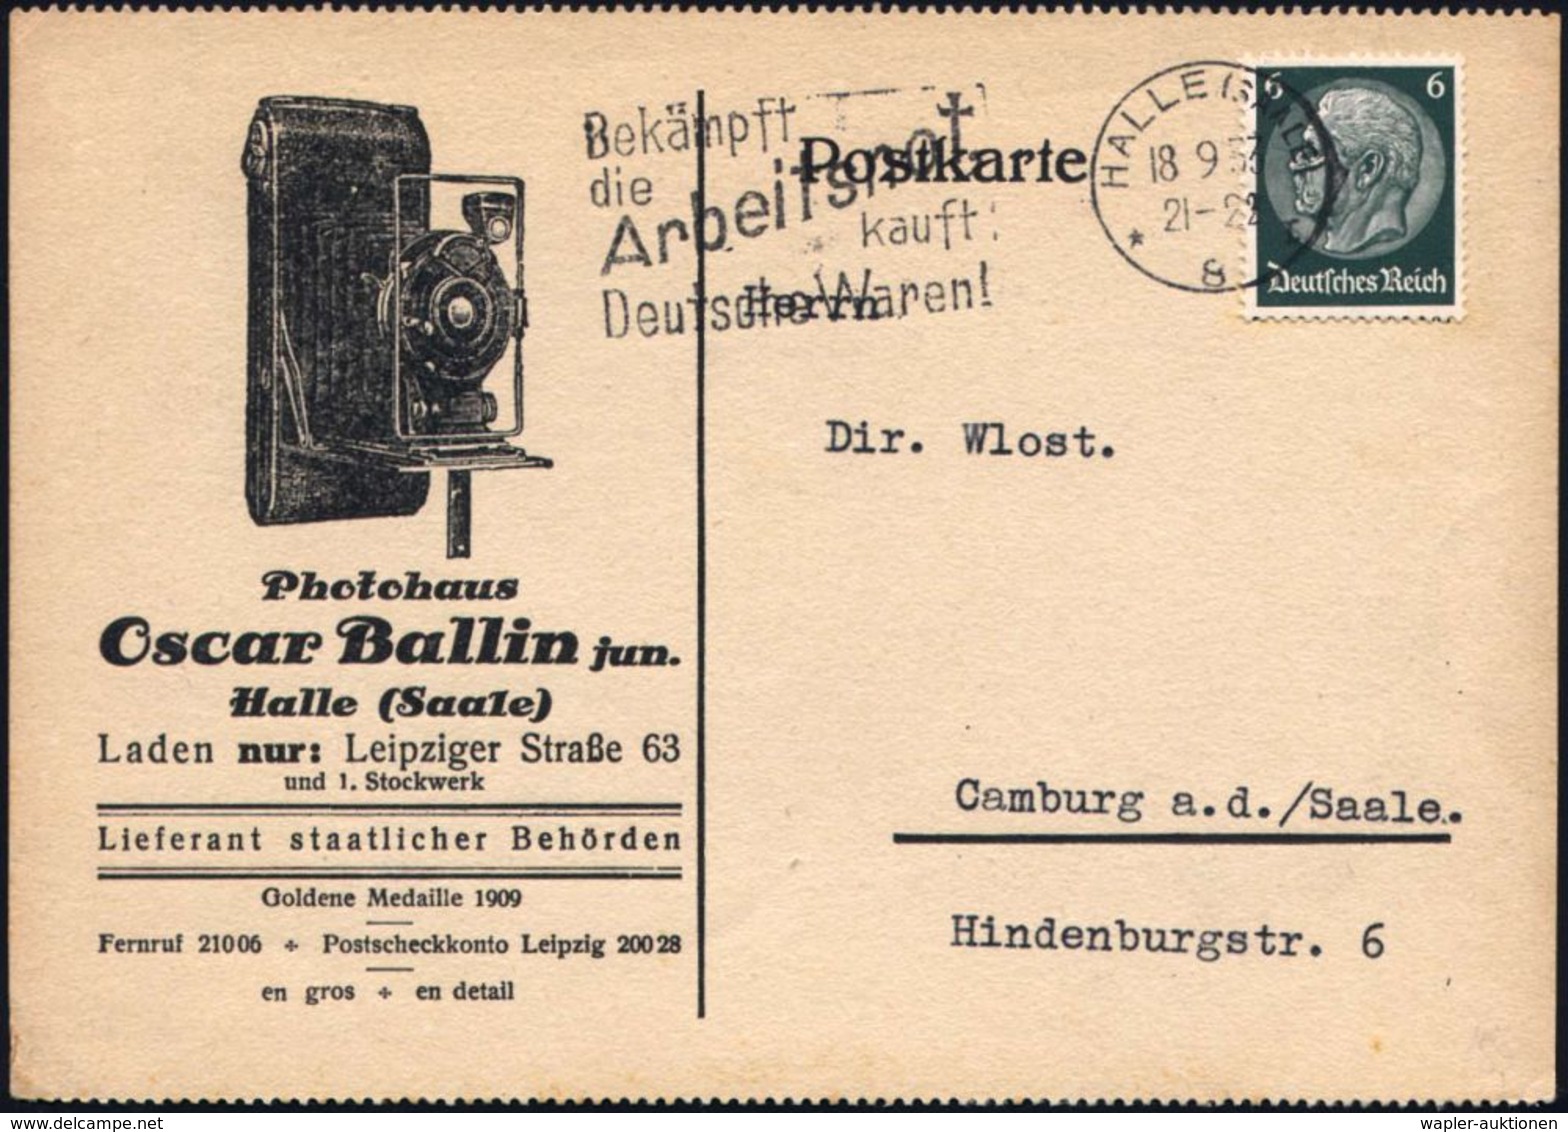 FOTOGRAFIE / KAMERAS / FOTOINDUSTRIE : HALLE (SAALE)/ *8I/ Bekämpft/ Die/ Arbeitsnot/ Kauft/ Deutsche Waren! 1933 (18.9. - Fotografie